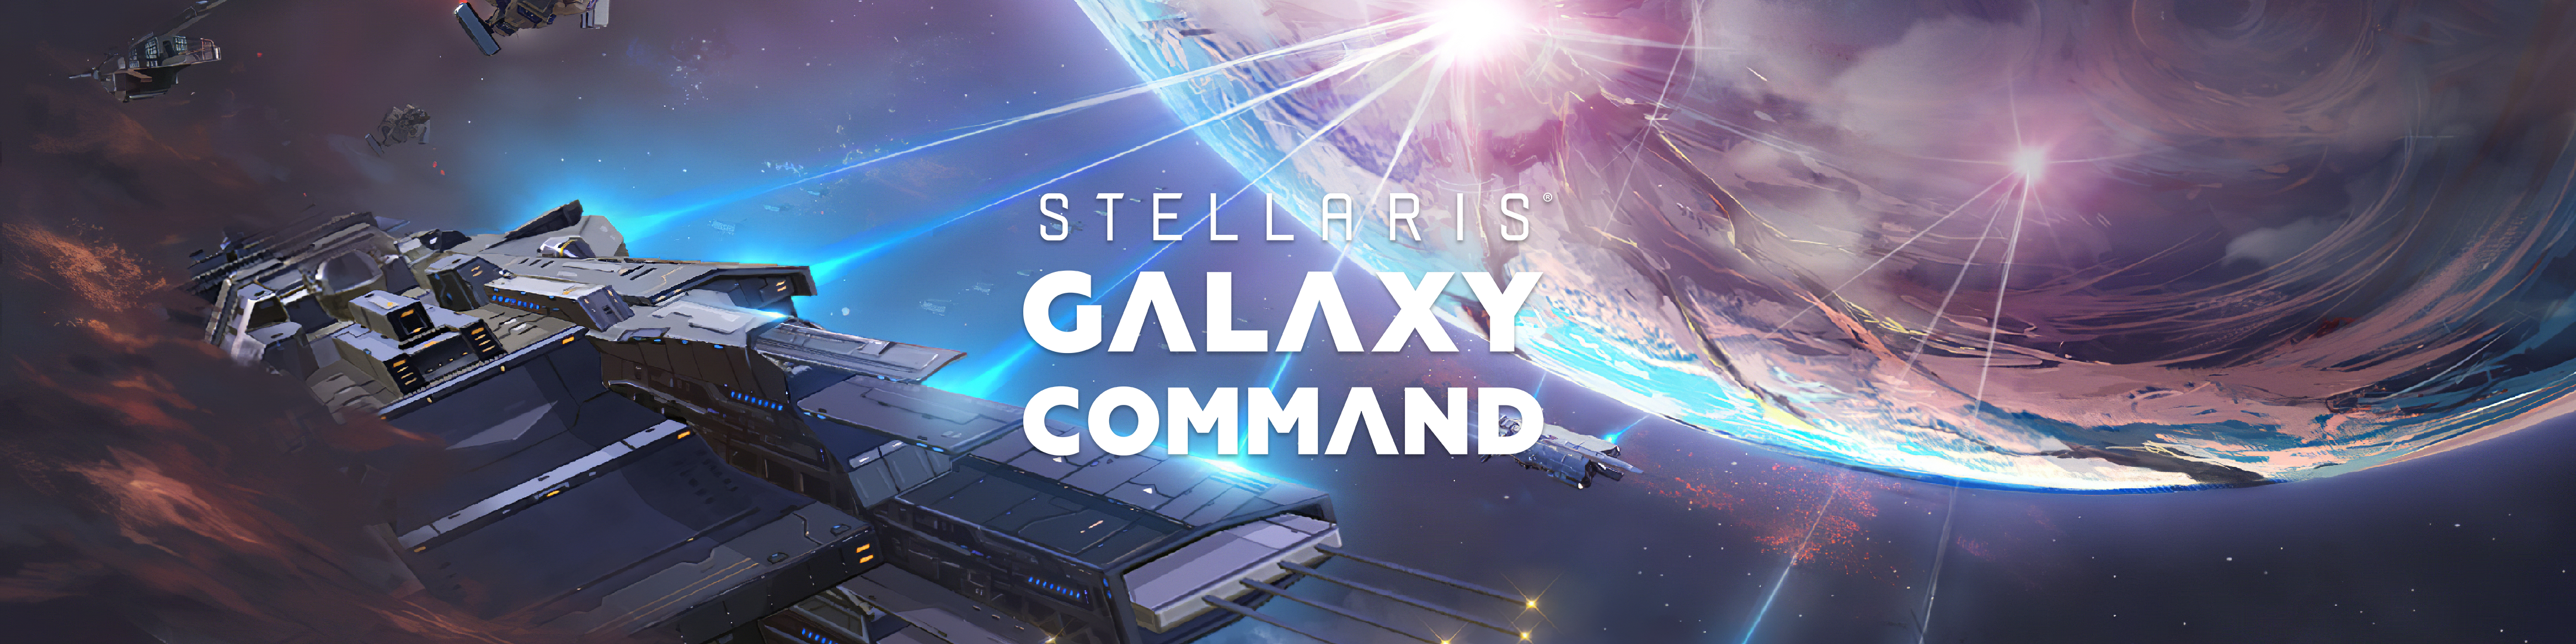 Stellaris_Galaxy_Command_art.png